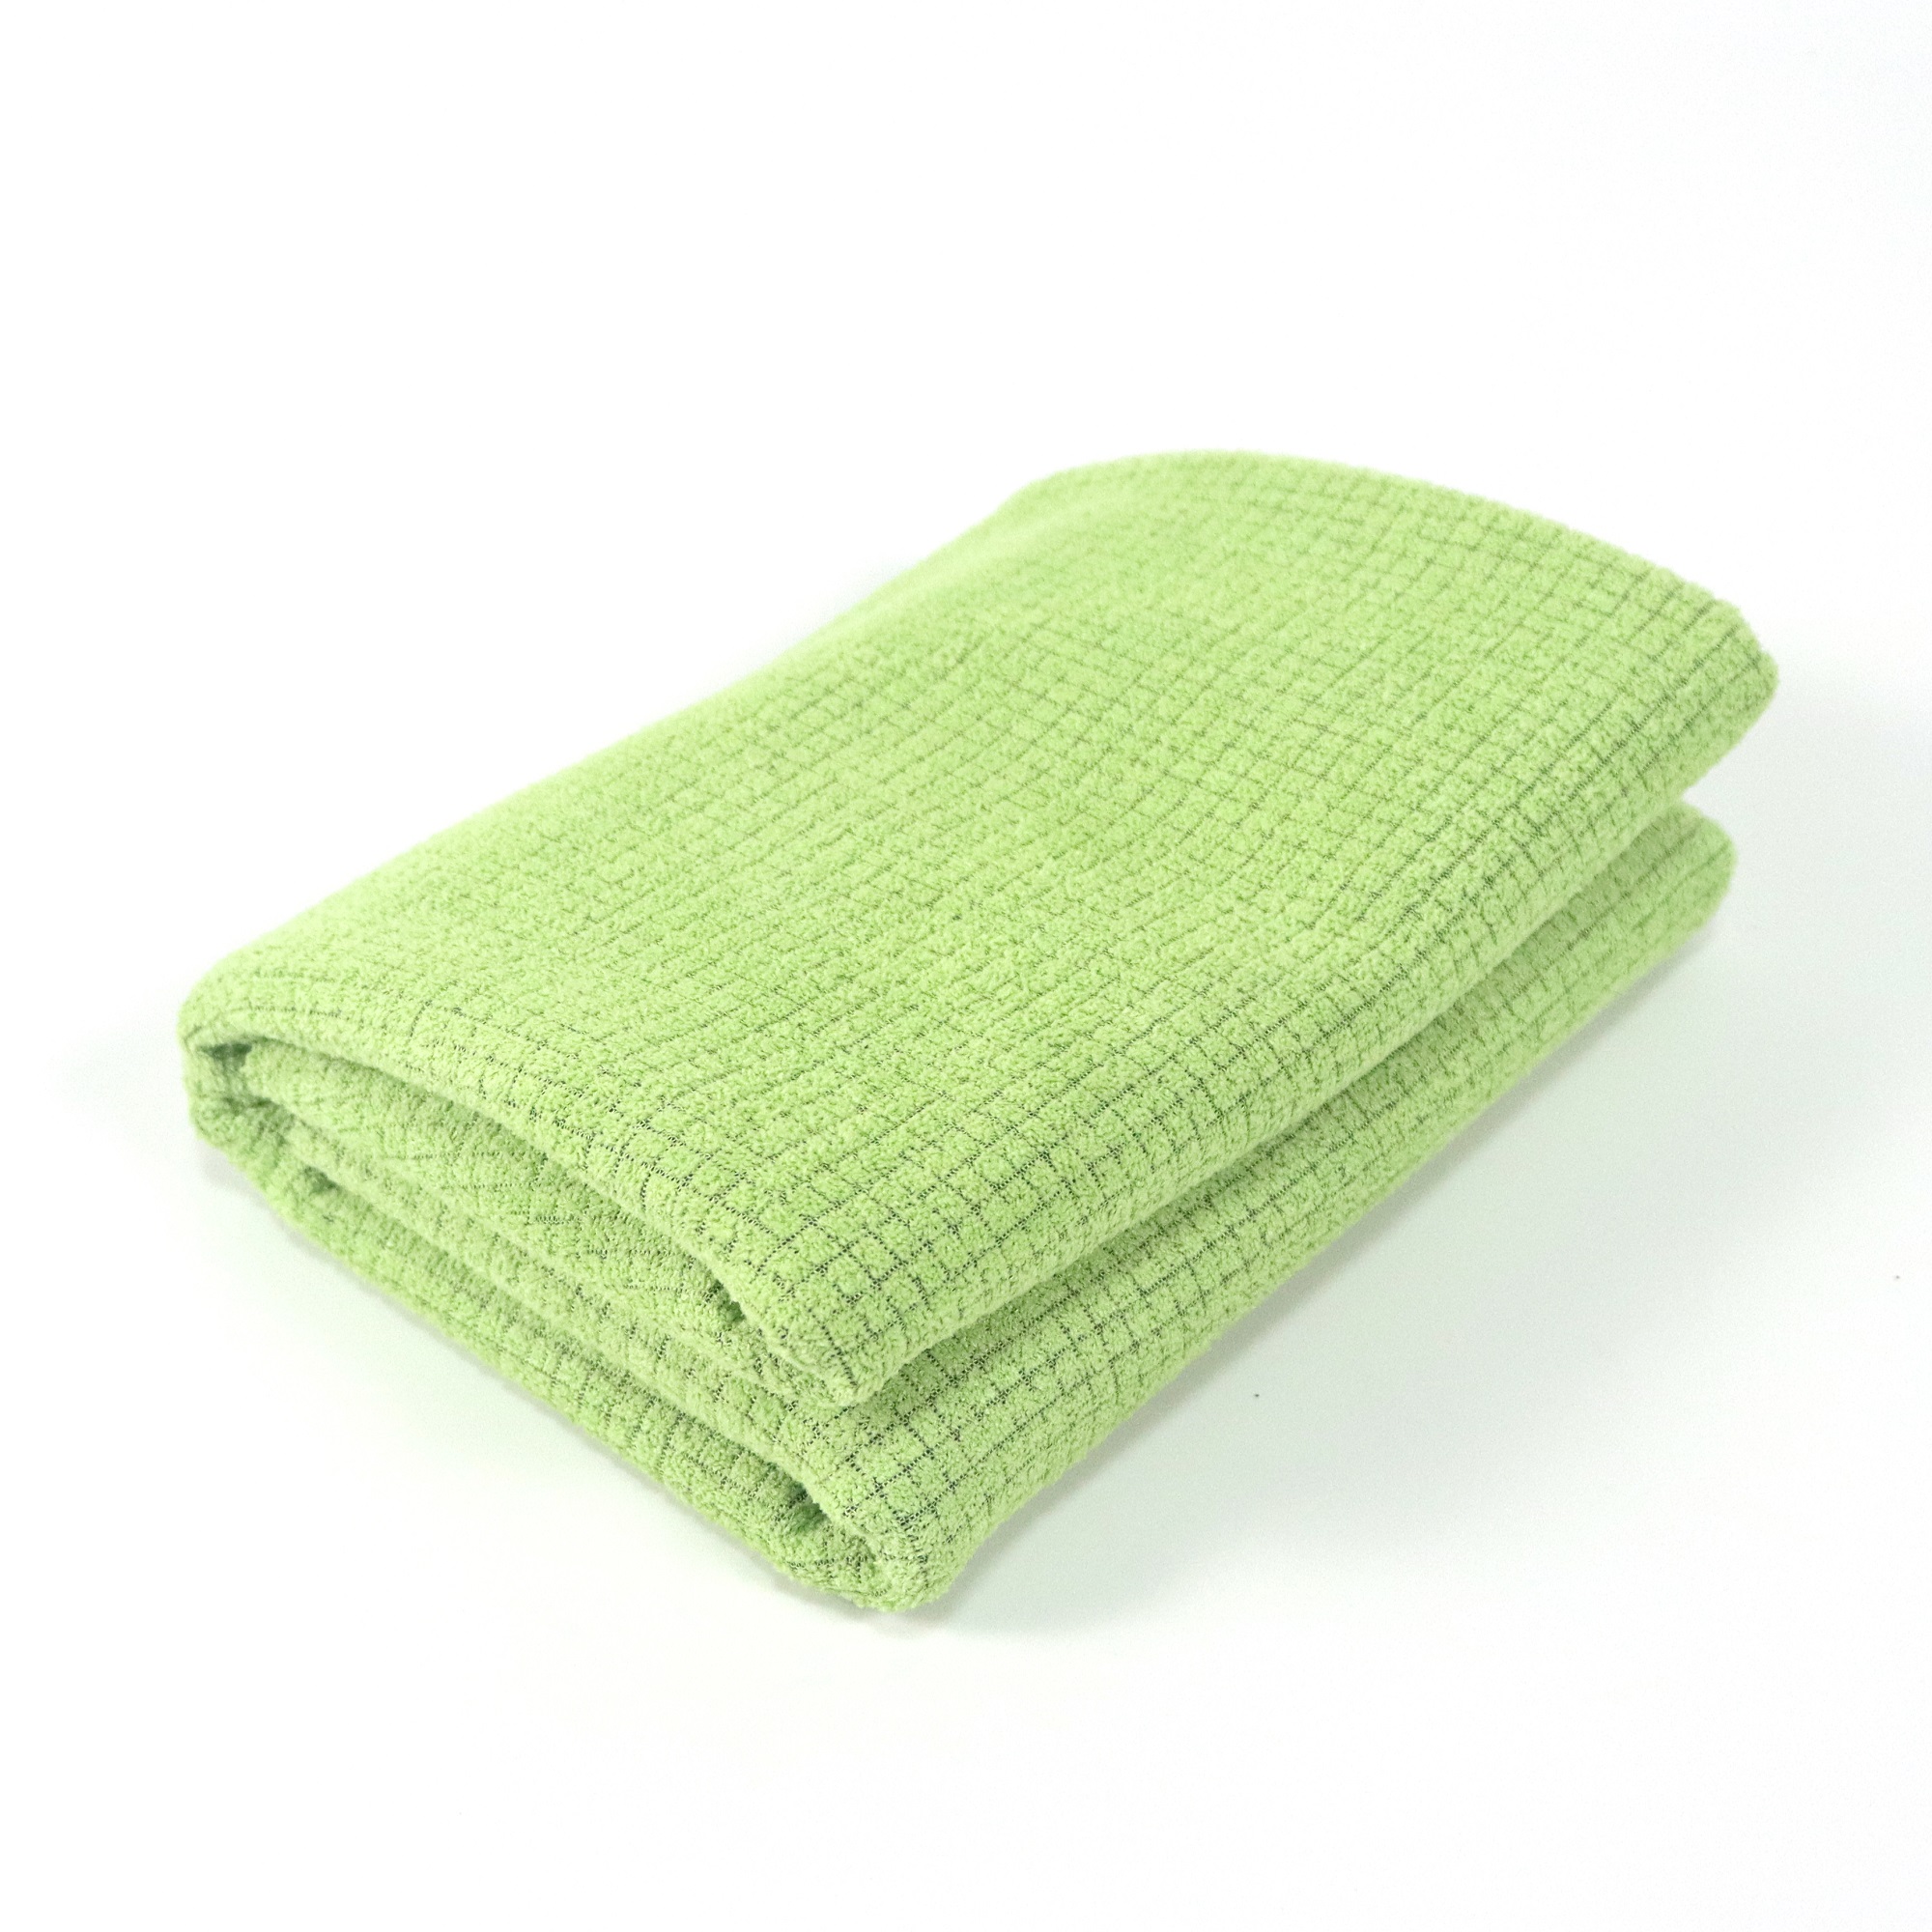 XTYM-008 Yoga Towel